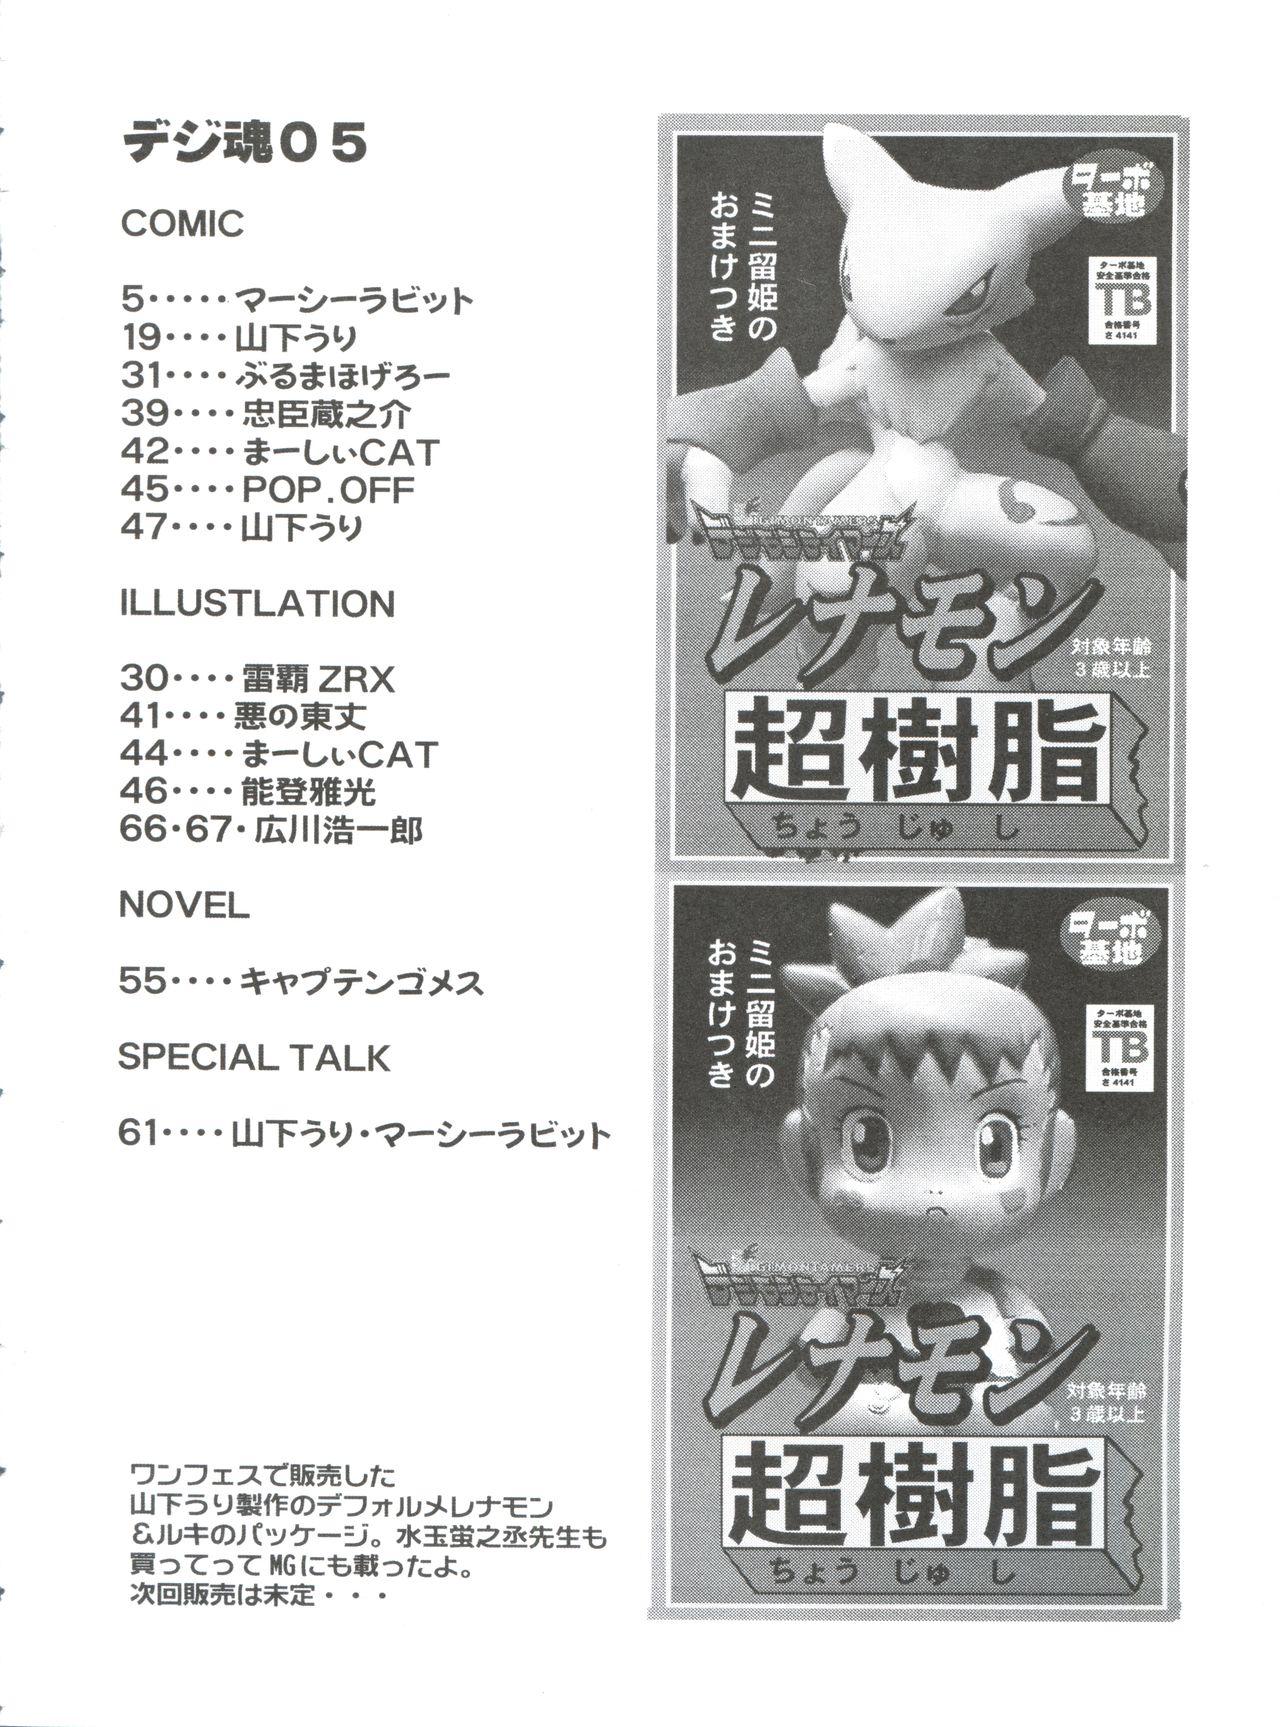 Bro Digitama 05 - Digimon adventure Digimon frontier X - Page 3